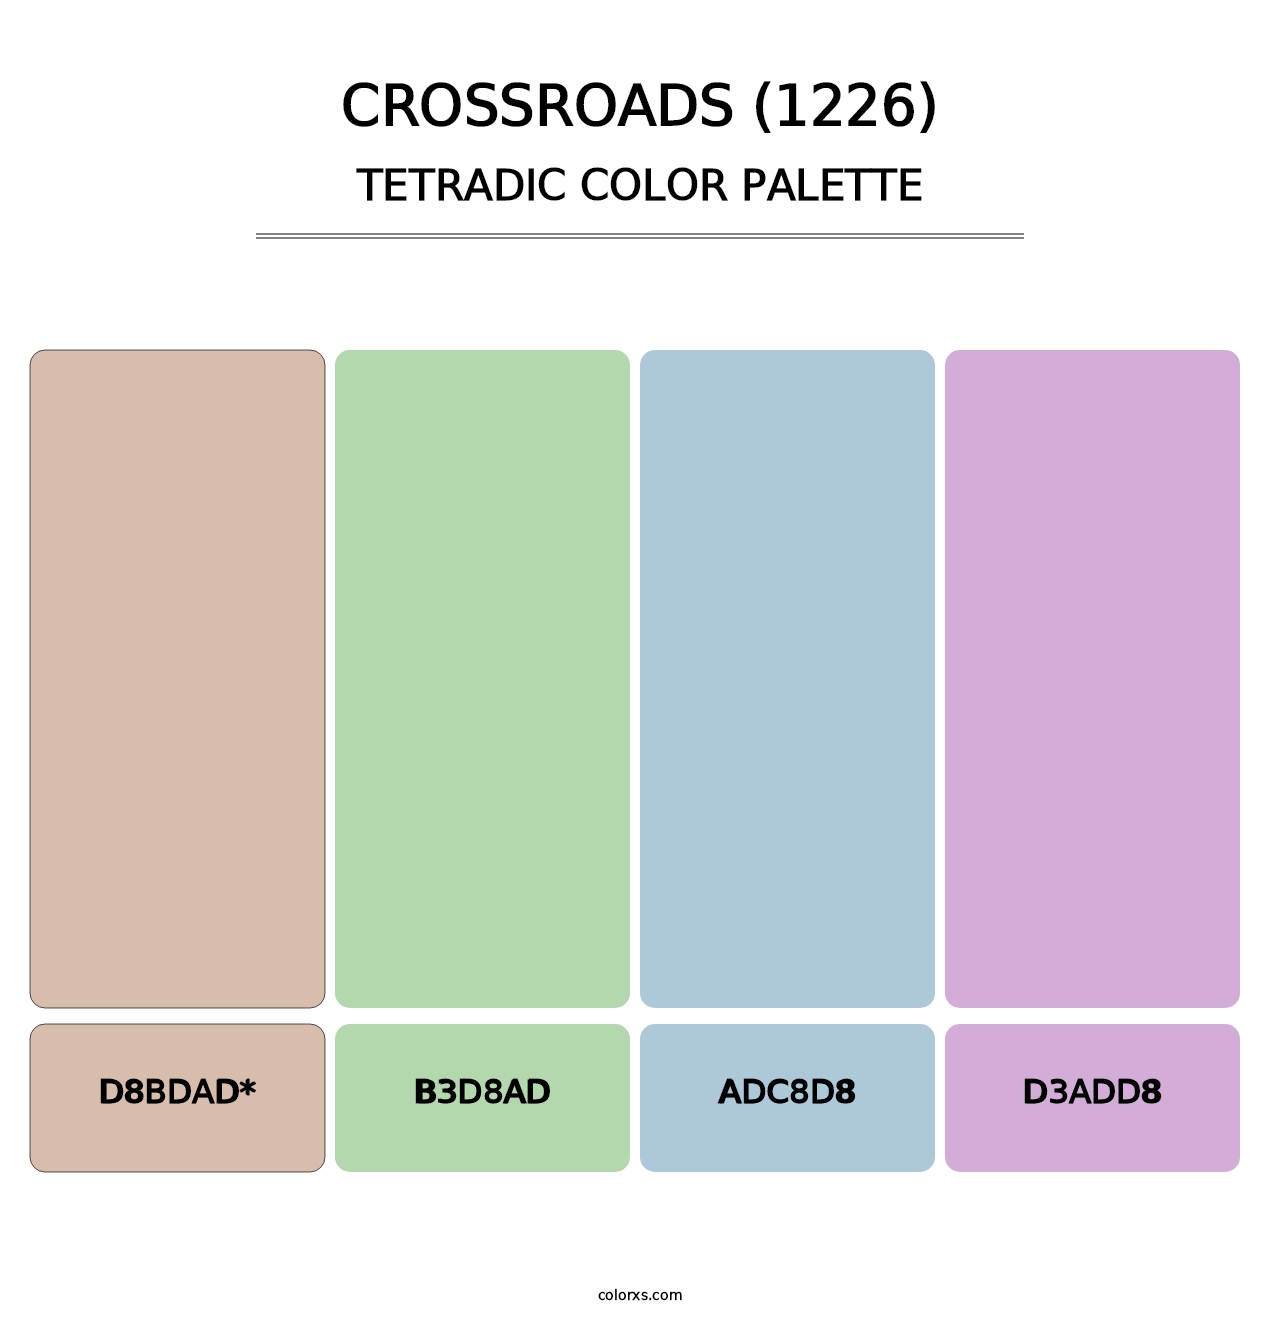 Crossroads (1226) - Tetradic Color Palette